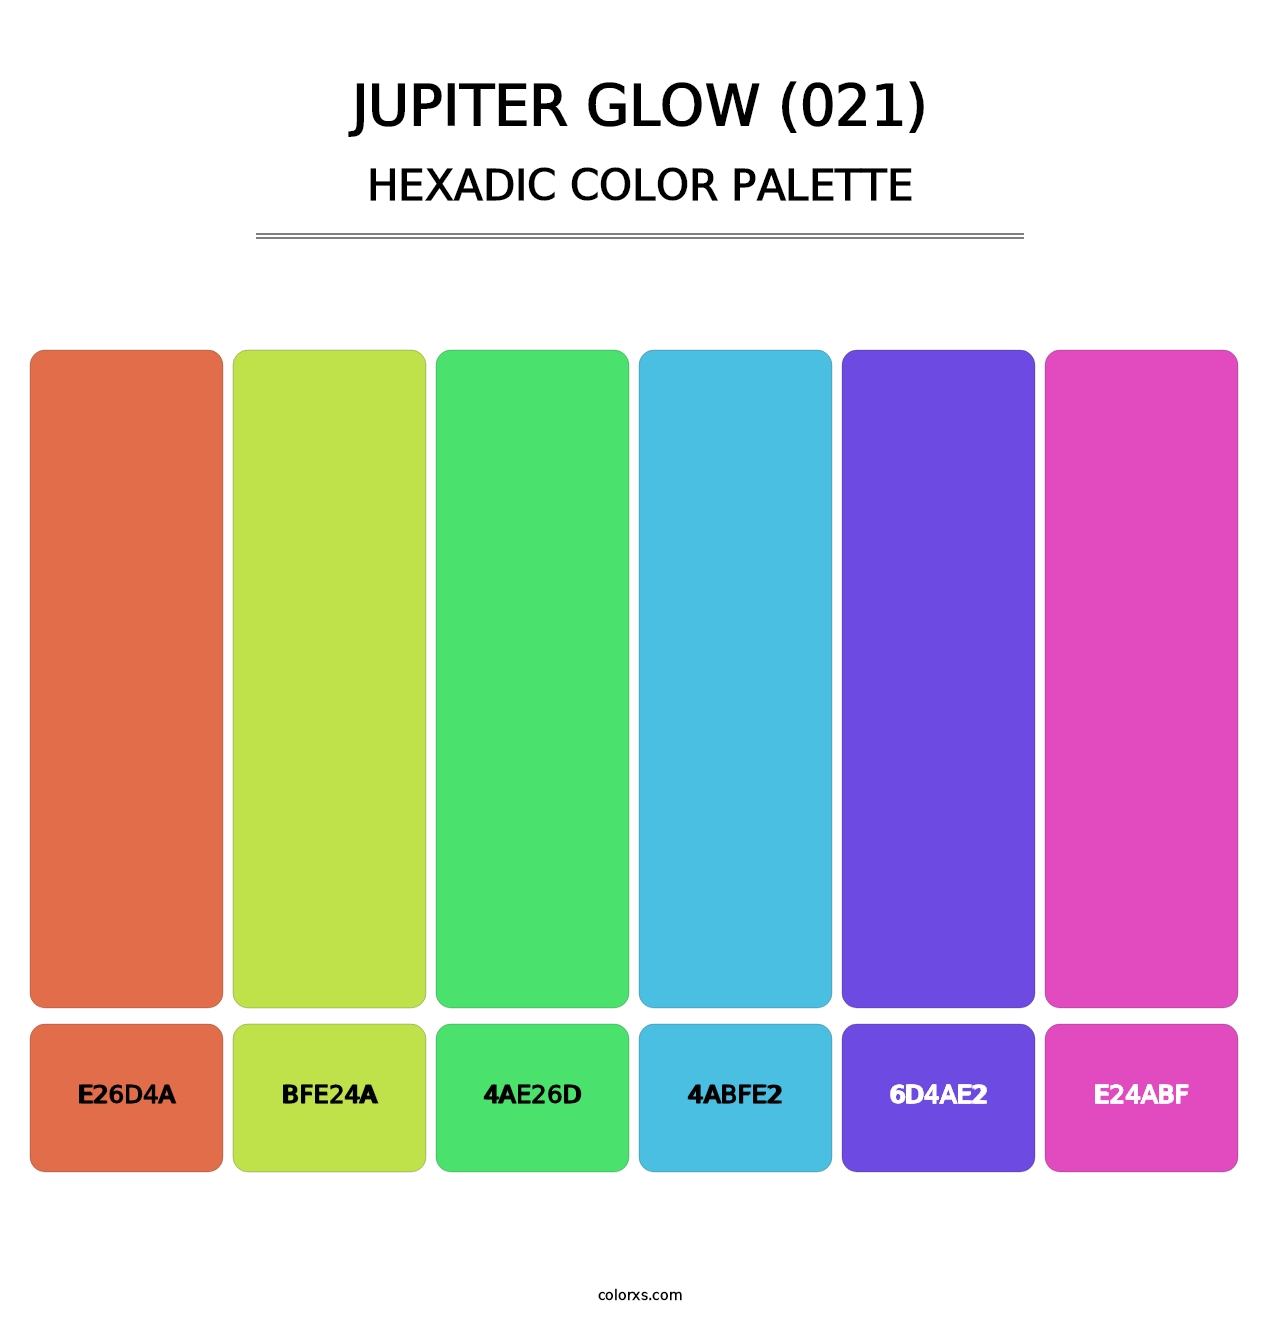 Jupiter Glow (021) - Hexadic Color Palette